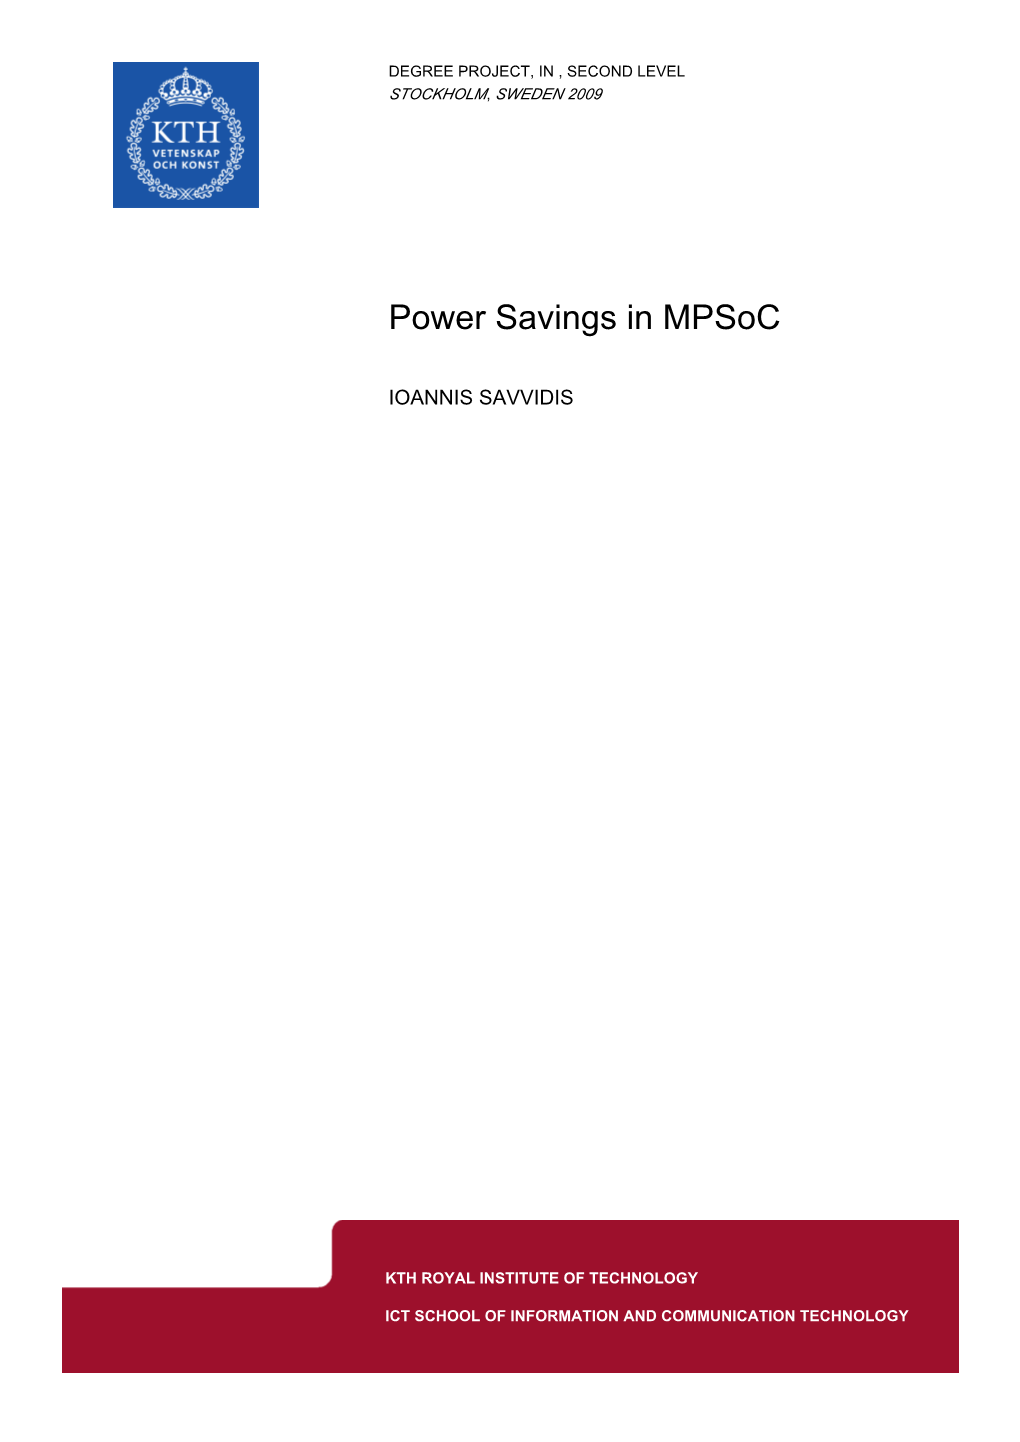 Power Savings in Mpsoc